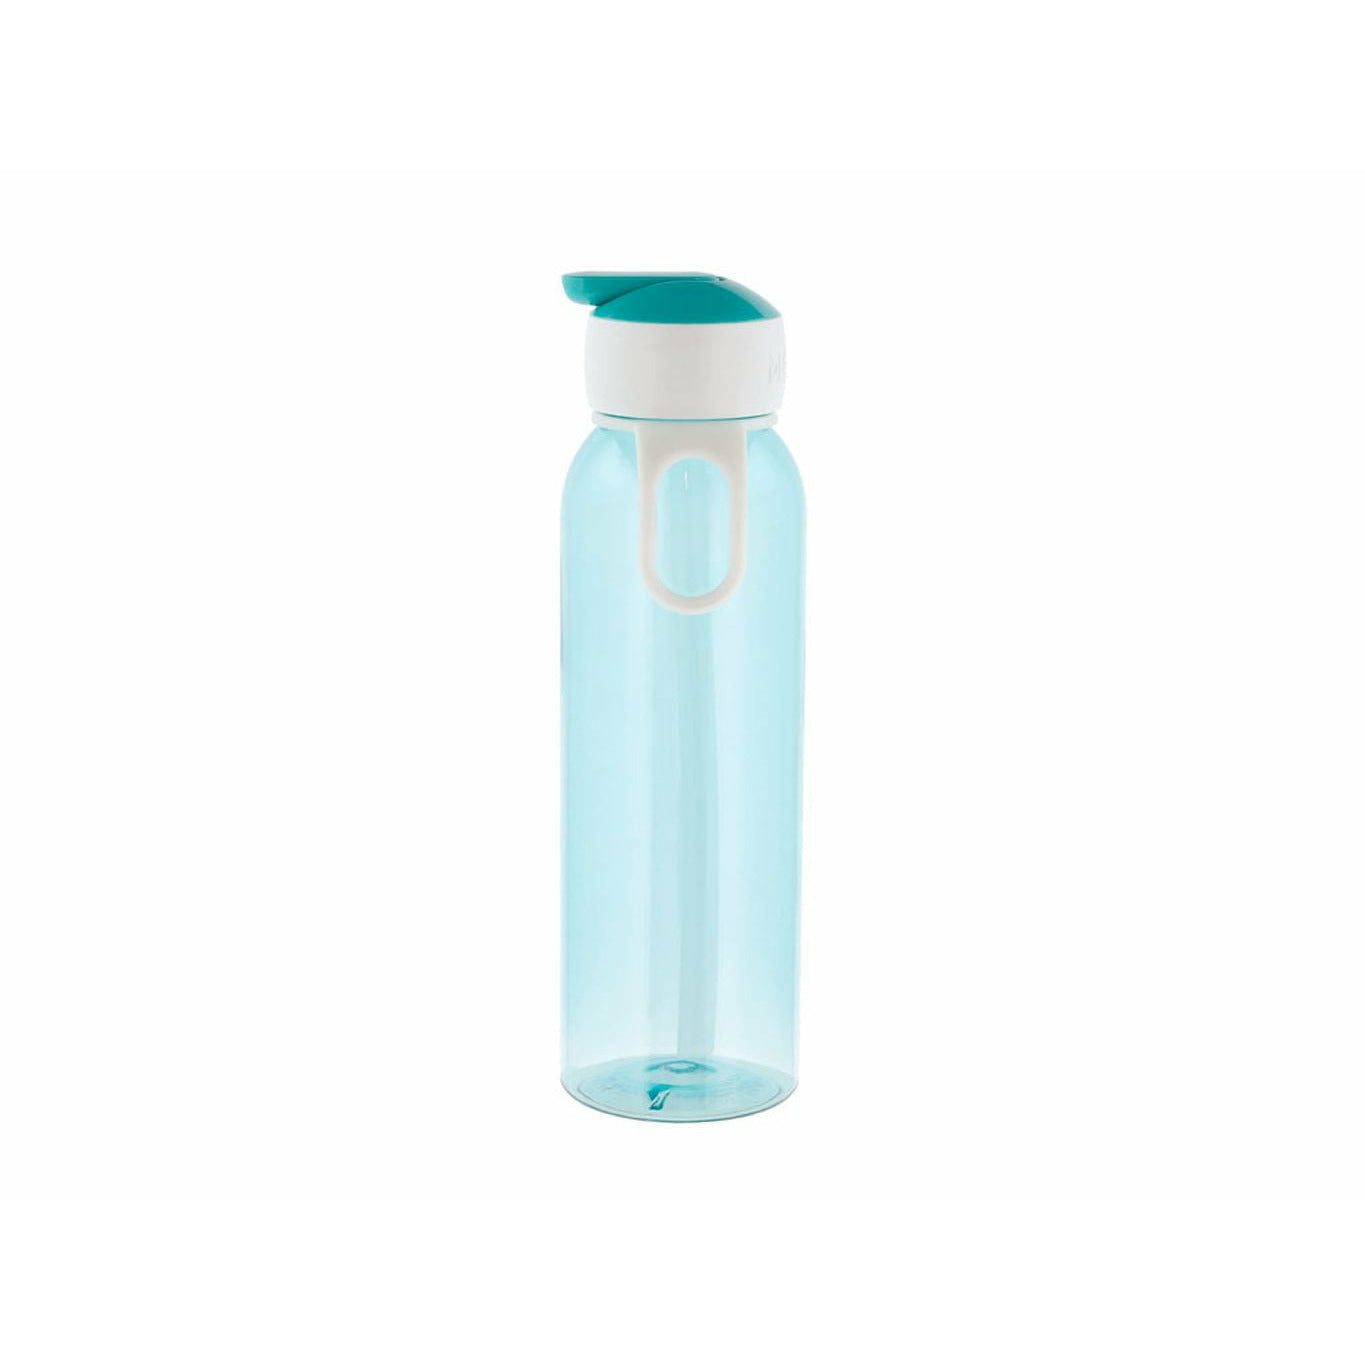 Mepal flip op campus vandflaske 0,5 L, blå / turkis